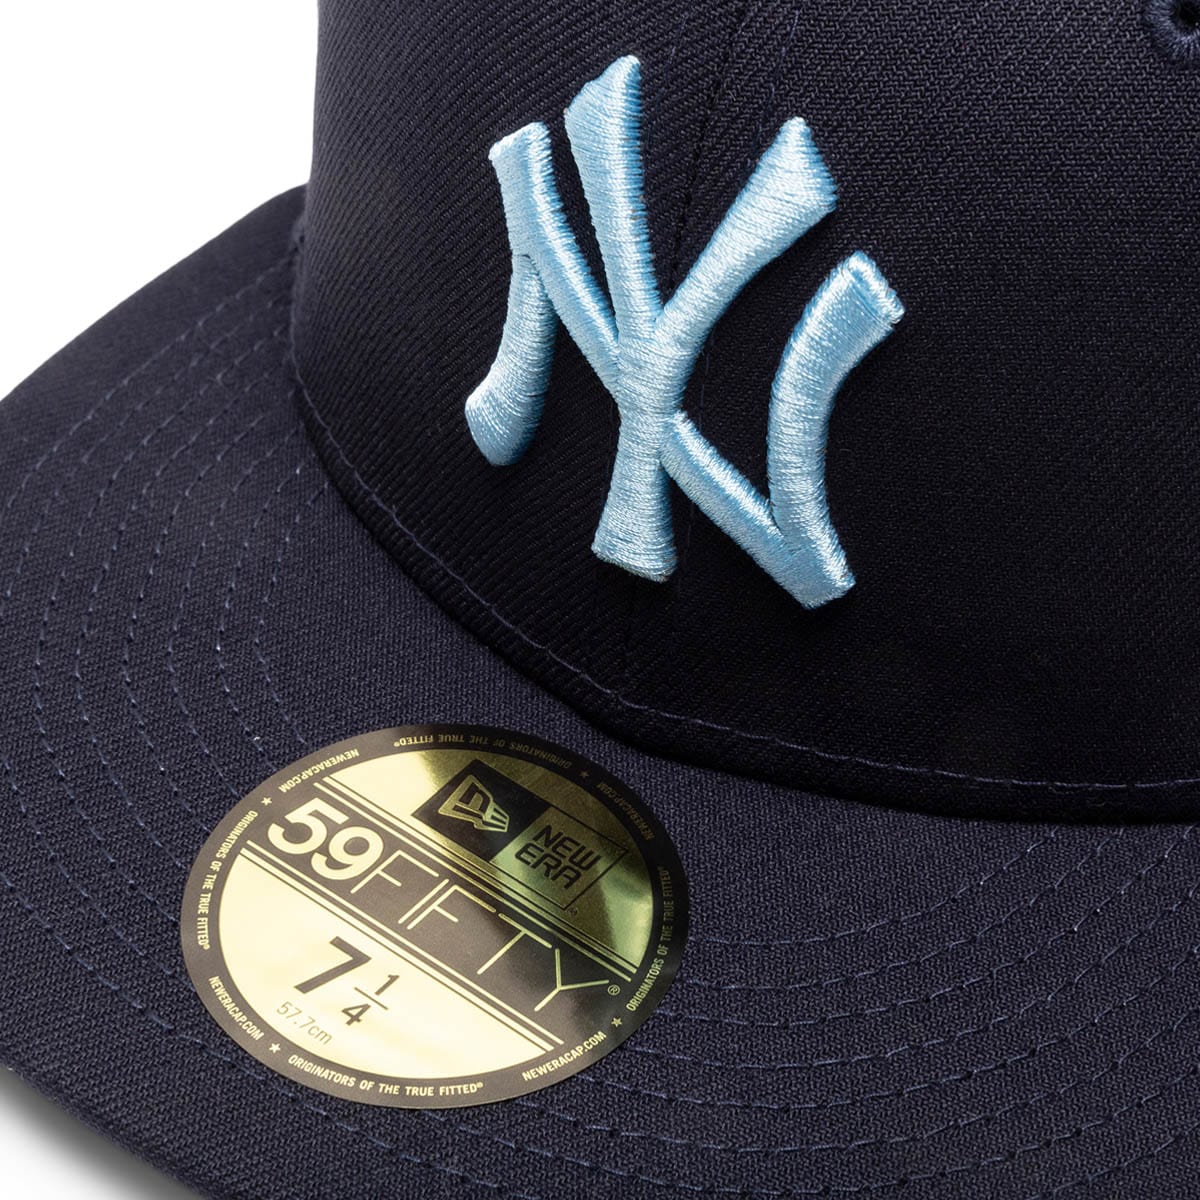 New Era Headwear 59FIFTY NEW YORK YANKEES CLOUD UNDER FITTED CAP